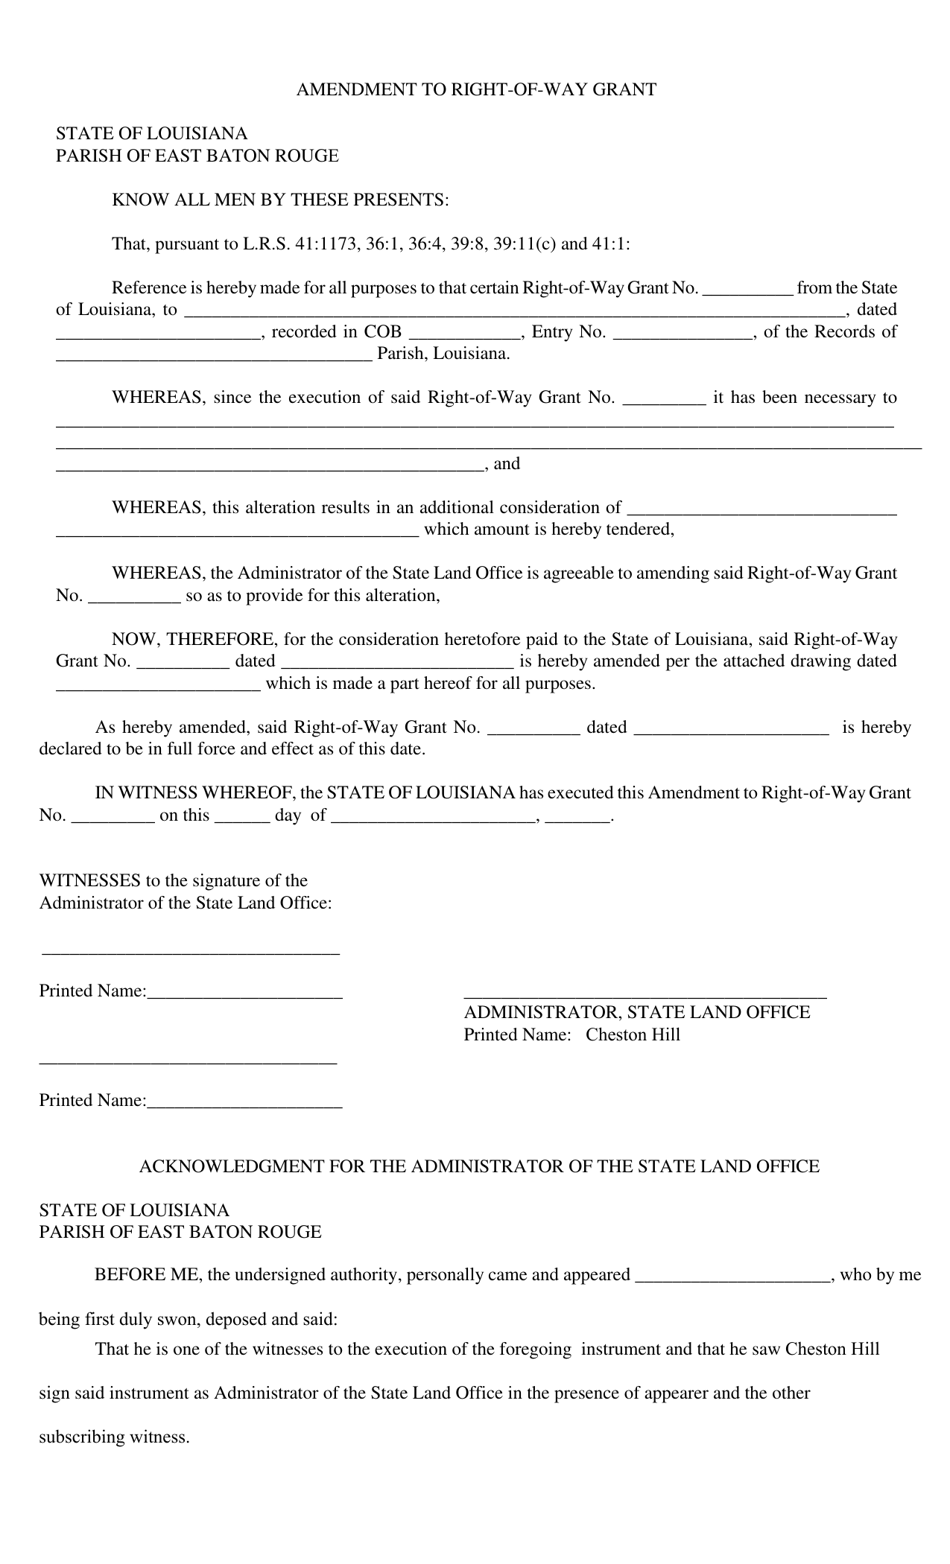 Amendment to Right-Of-Way Grant - Louisiana, Page 1